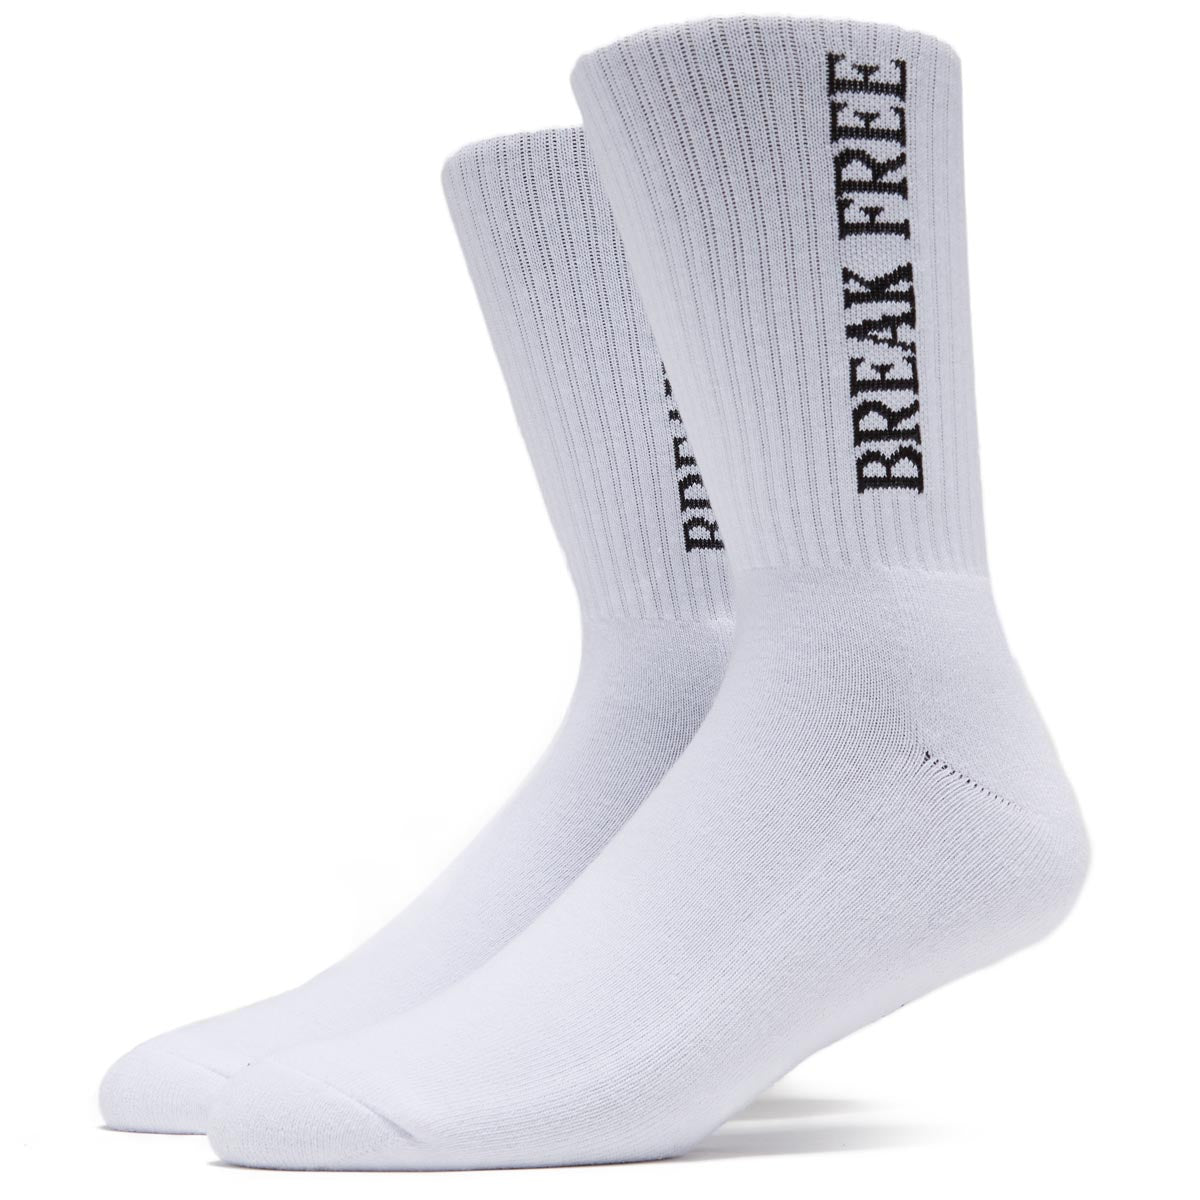 Last Resort AB Break Free Socks - White/Black image 1